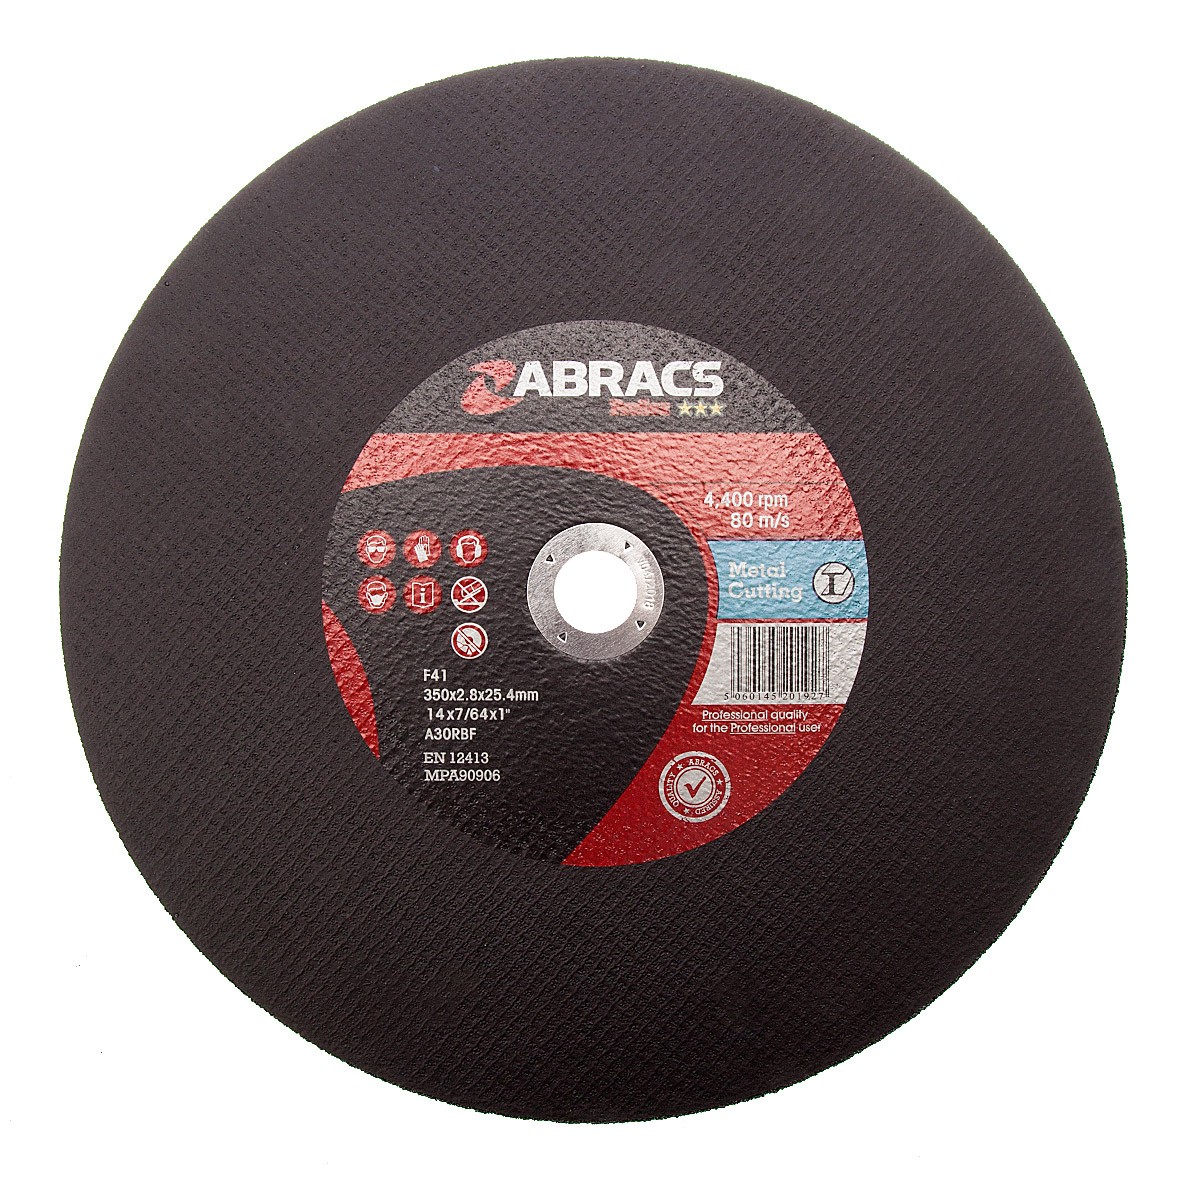 CUTTING DISC 14" FOR METAL Abracs 350 x 2.8 x 25.4mm 